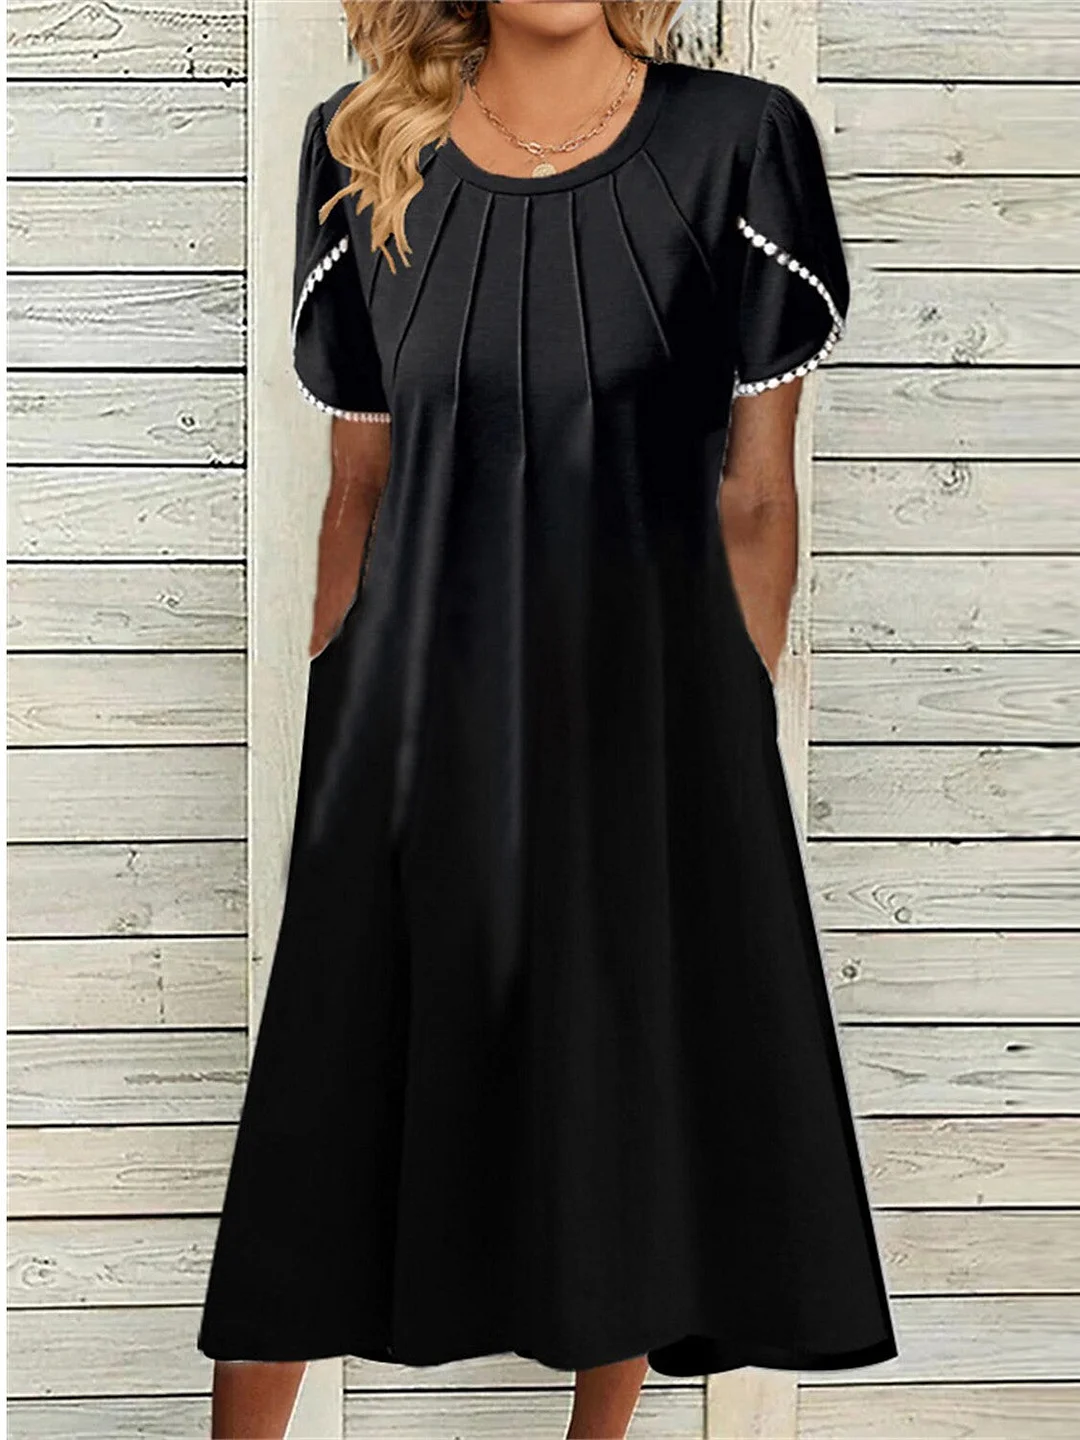 Women's Short Sleeve Scoop Neck Solid Color Casual Pocket Dress